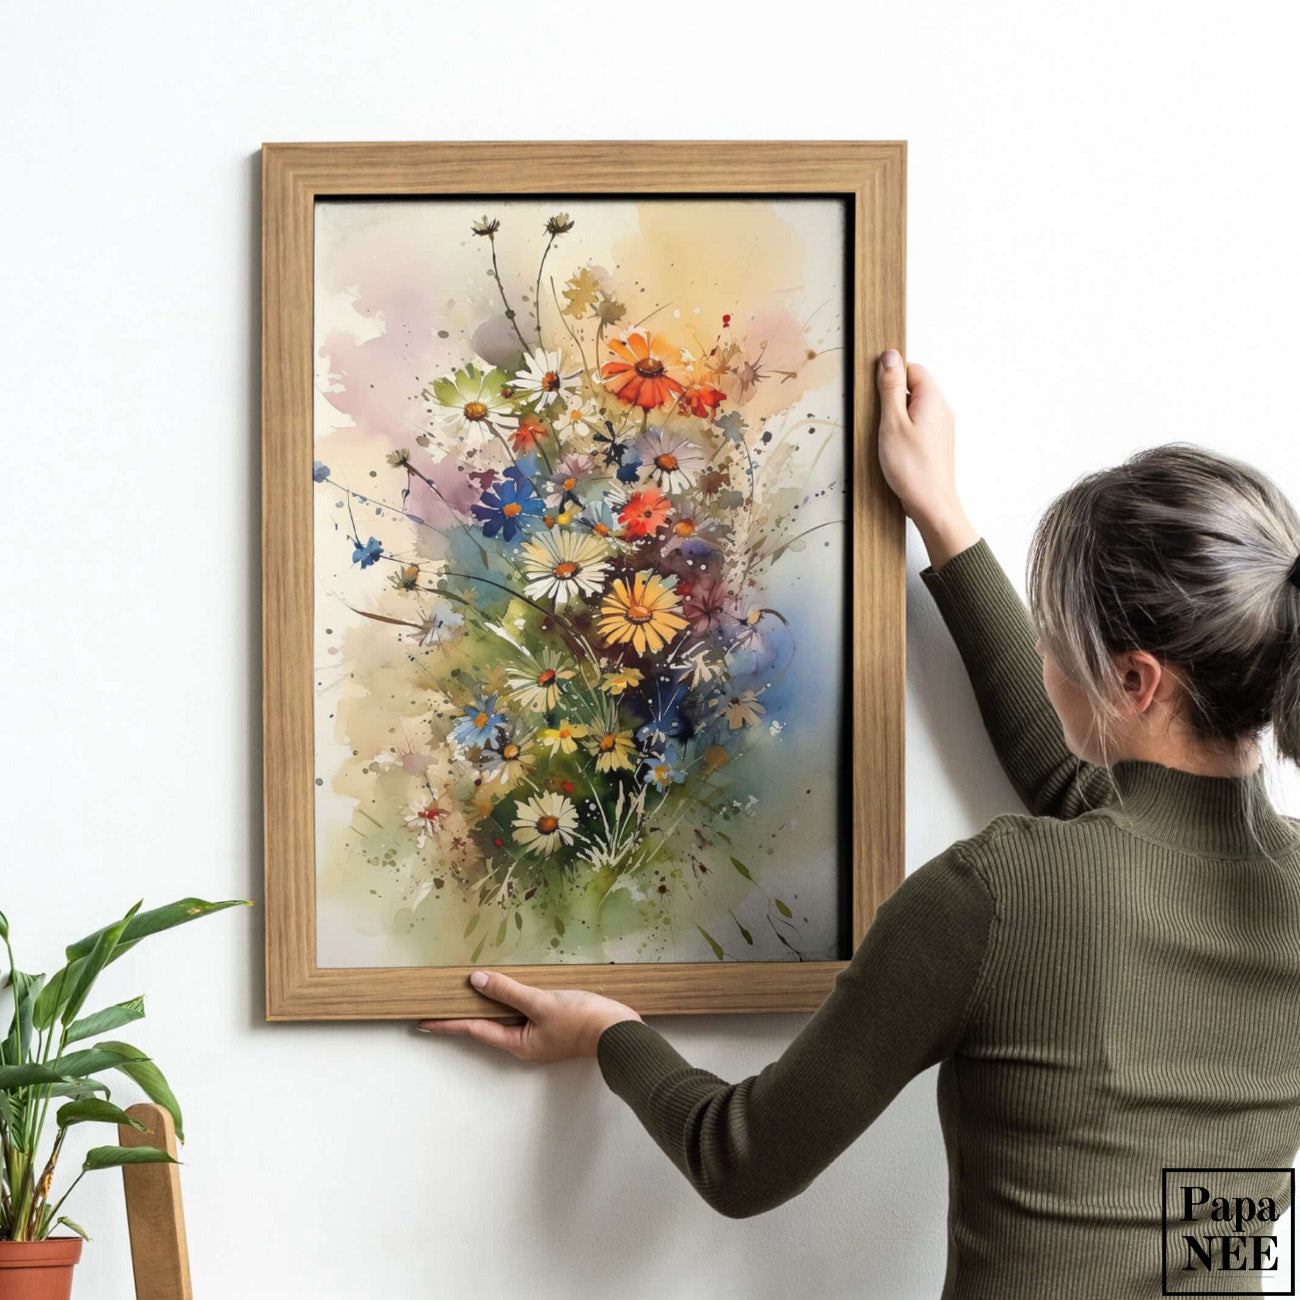 Blooming Splendor - Poster